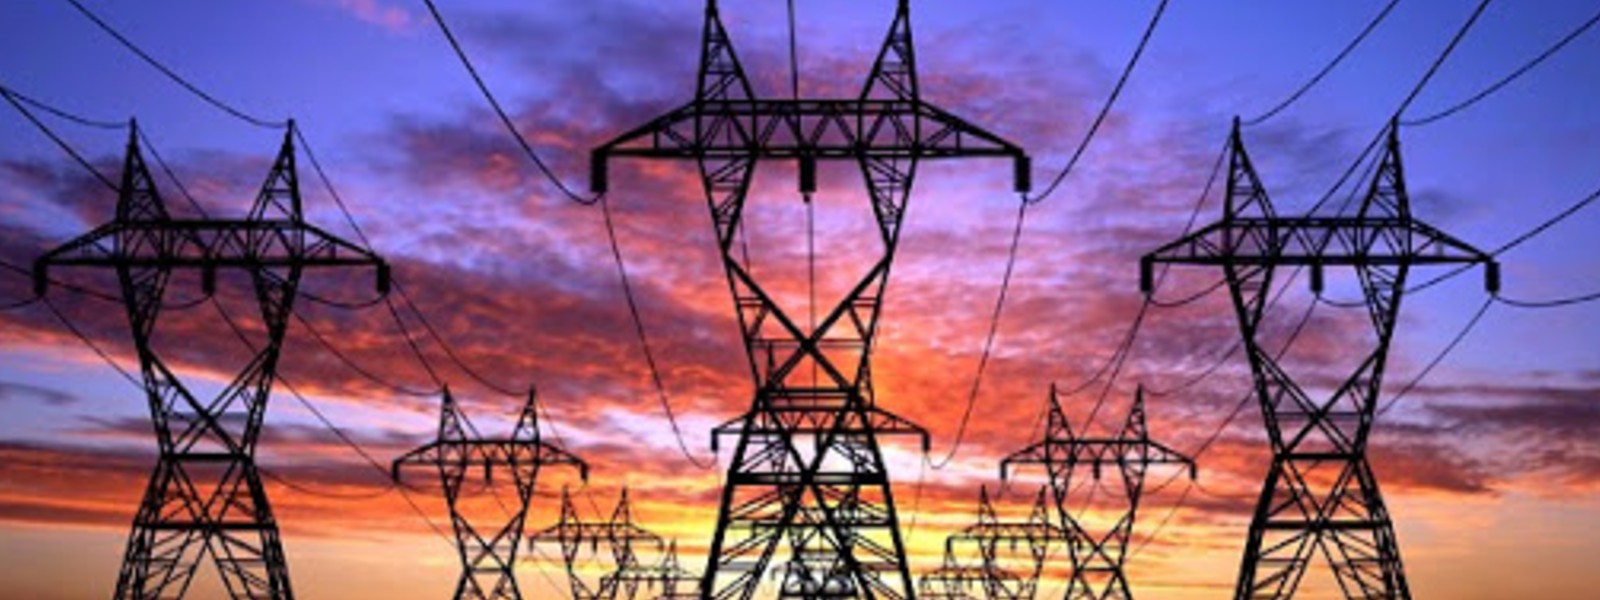 Sri Lanka’s Electricity Crisis: Officials scramble to ensure power supply